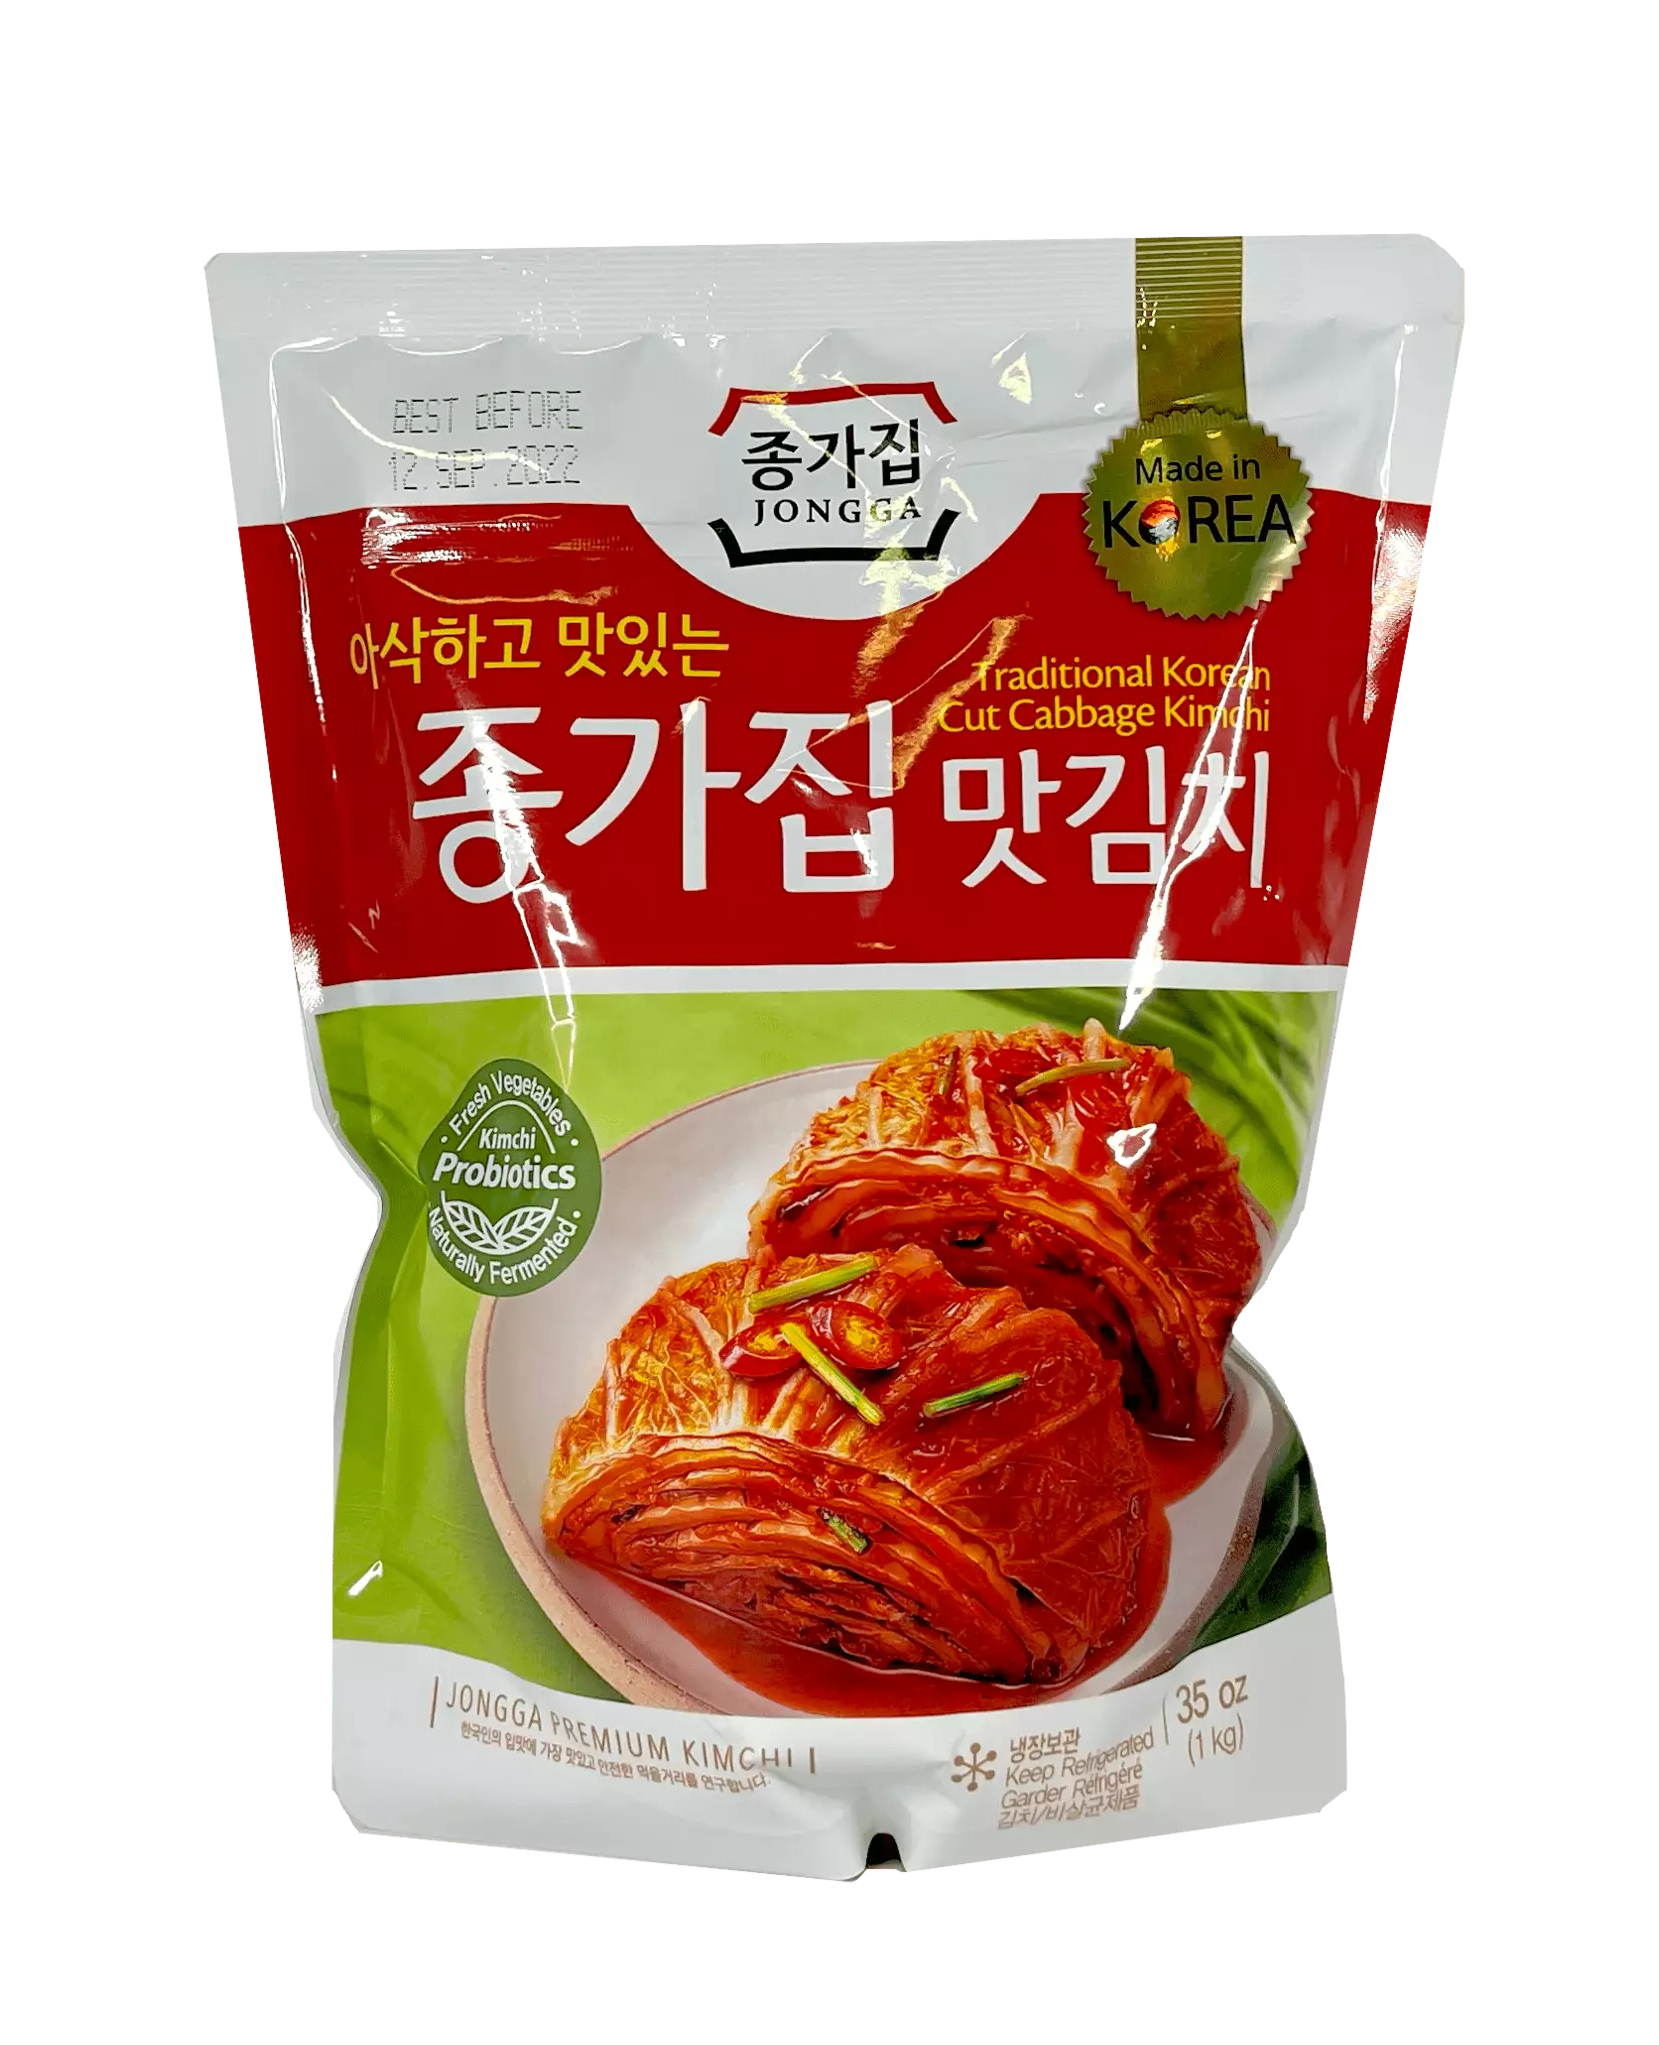 Chongga Mat/Cabbage Kimchi 1000g Korea